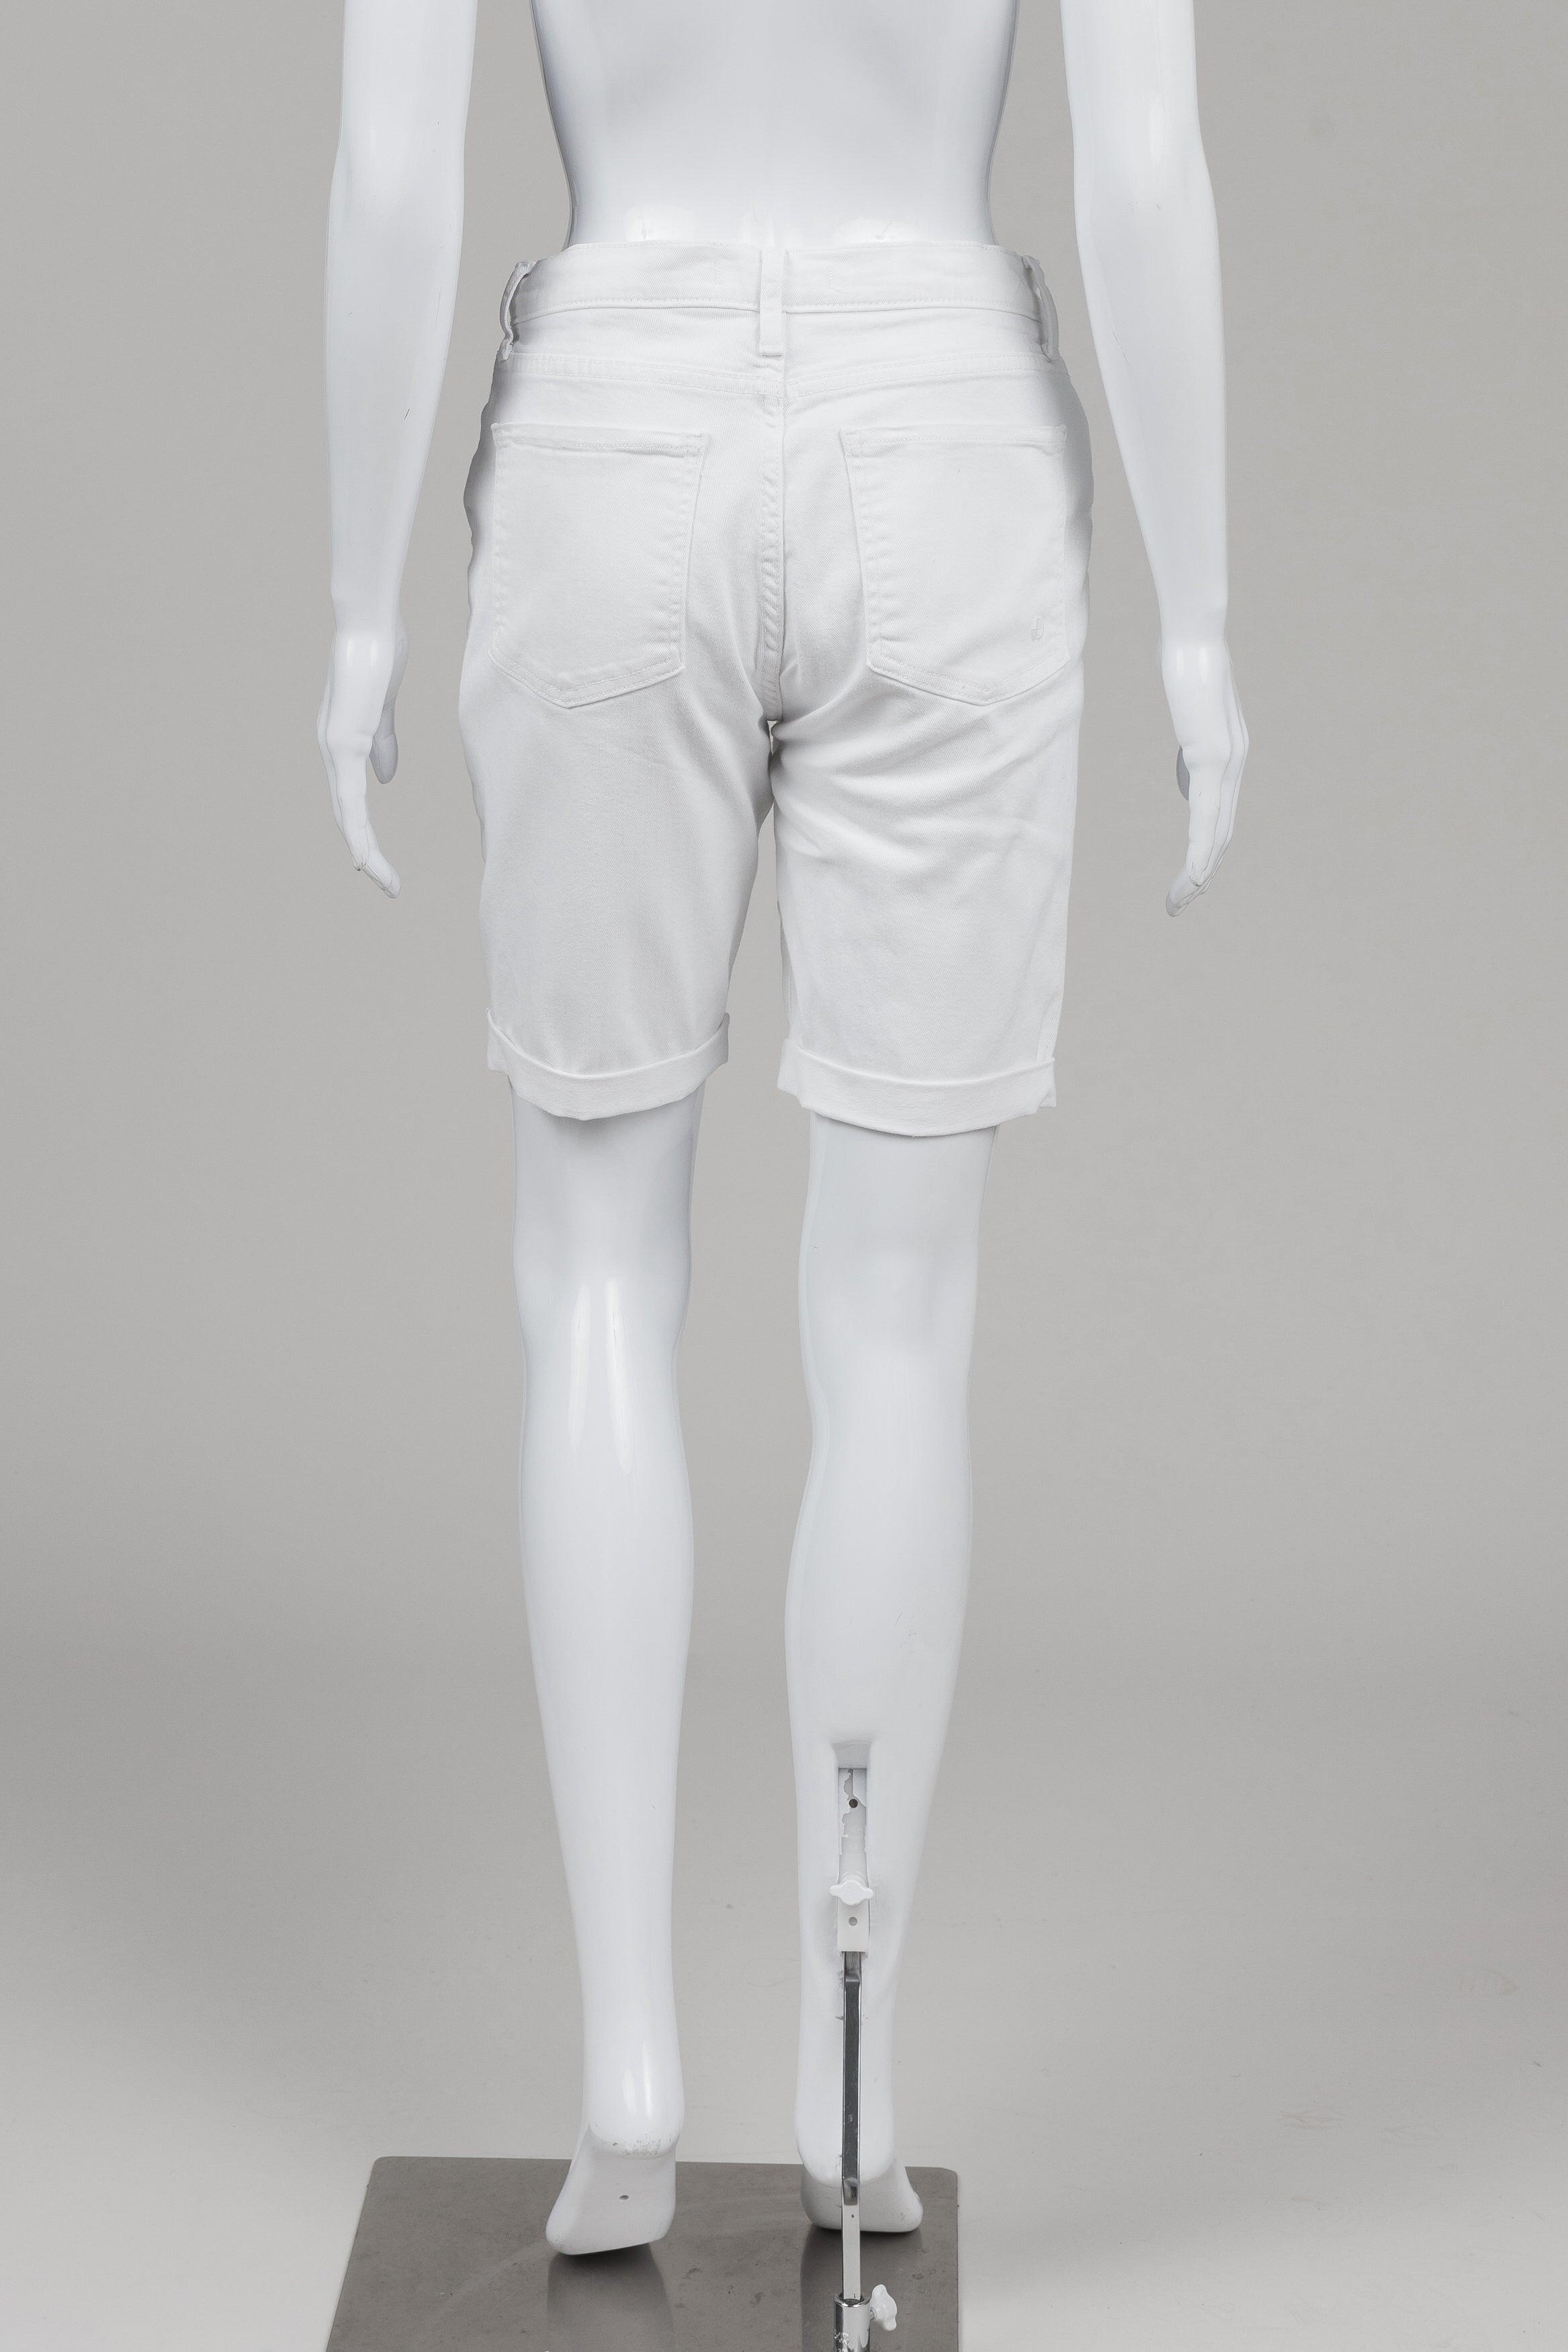 Fidelity White Jean Shorts (28)